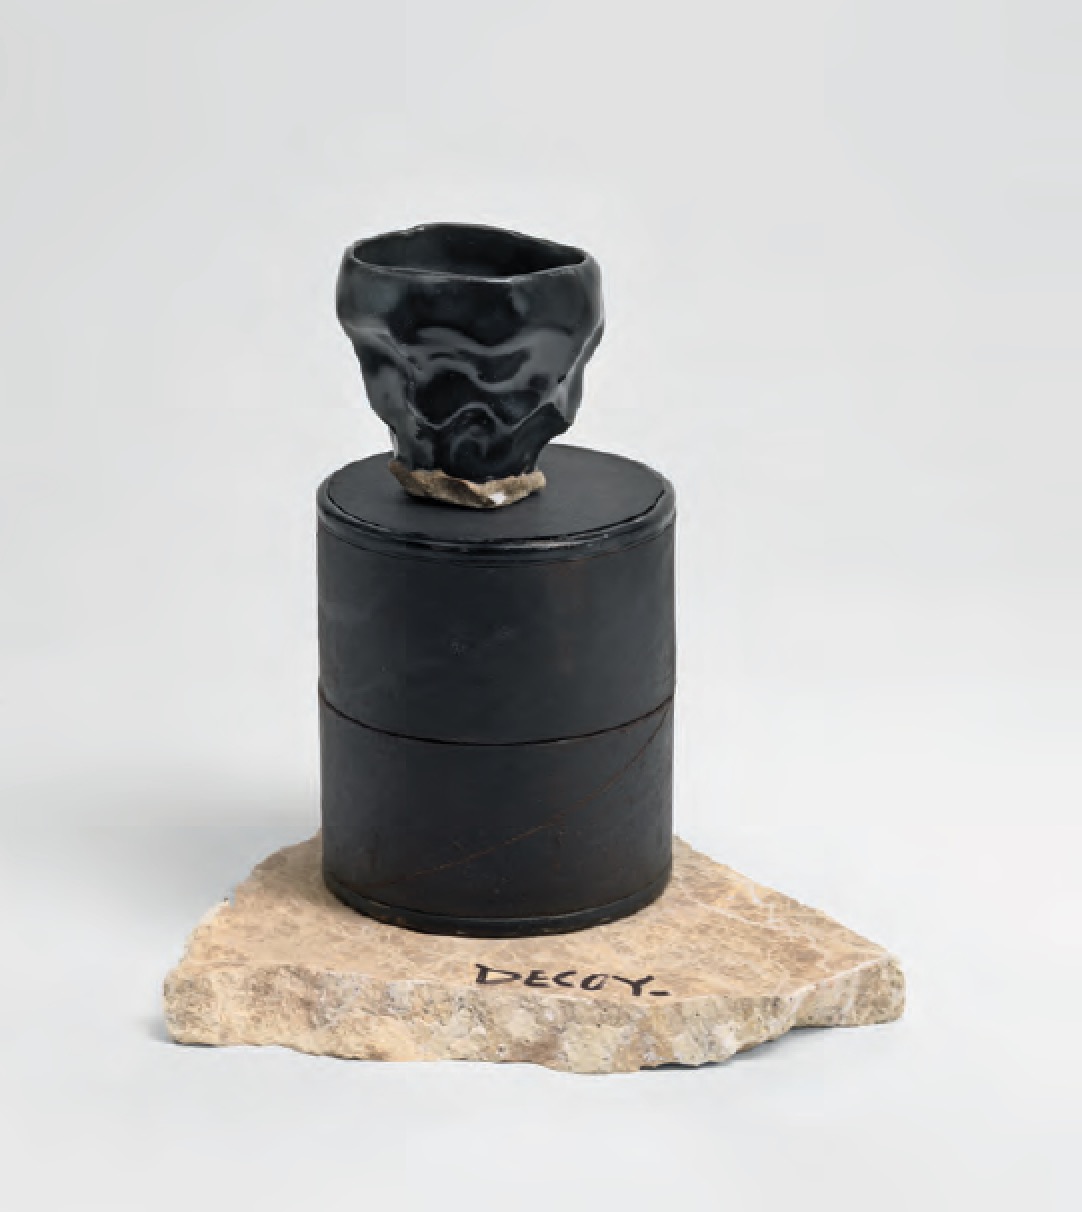 DECOY_Cup_2, 2013 Stoneware, porcelain blade, cardboard, granite - JJ PEET - courtesy the artist and On Stellar Rays